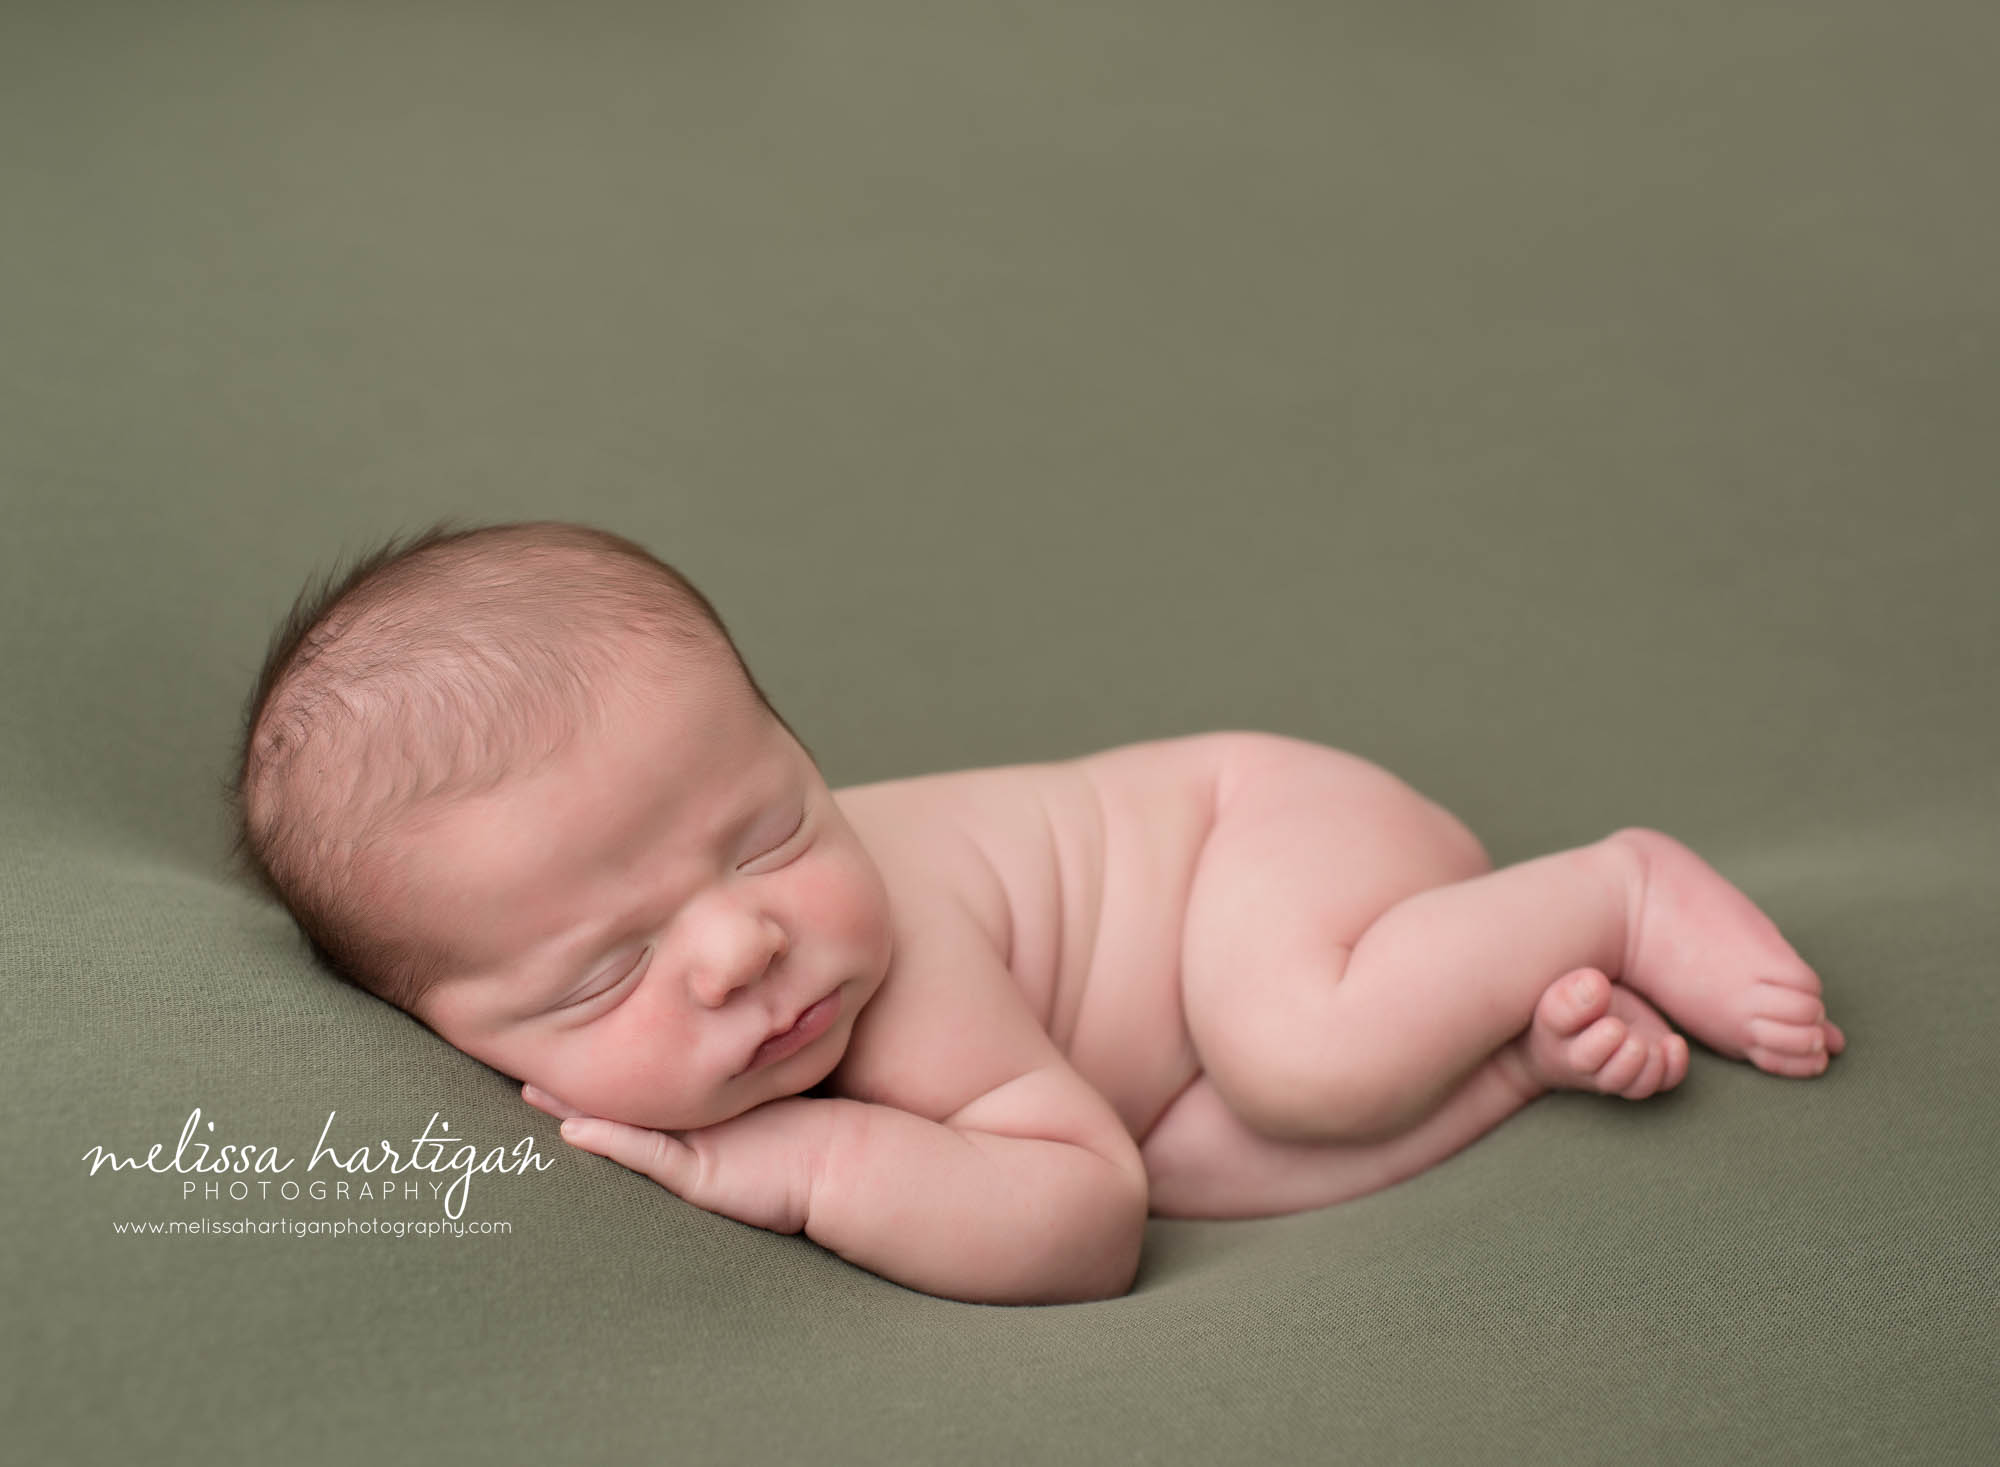 newborn baby boy pose don green backdrop newborn photographer middlesex county ct